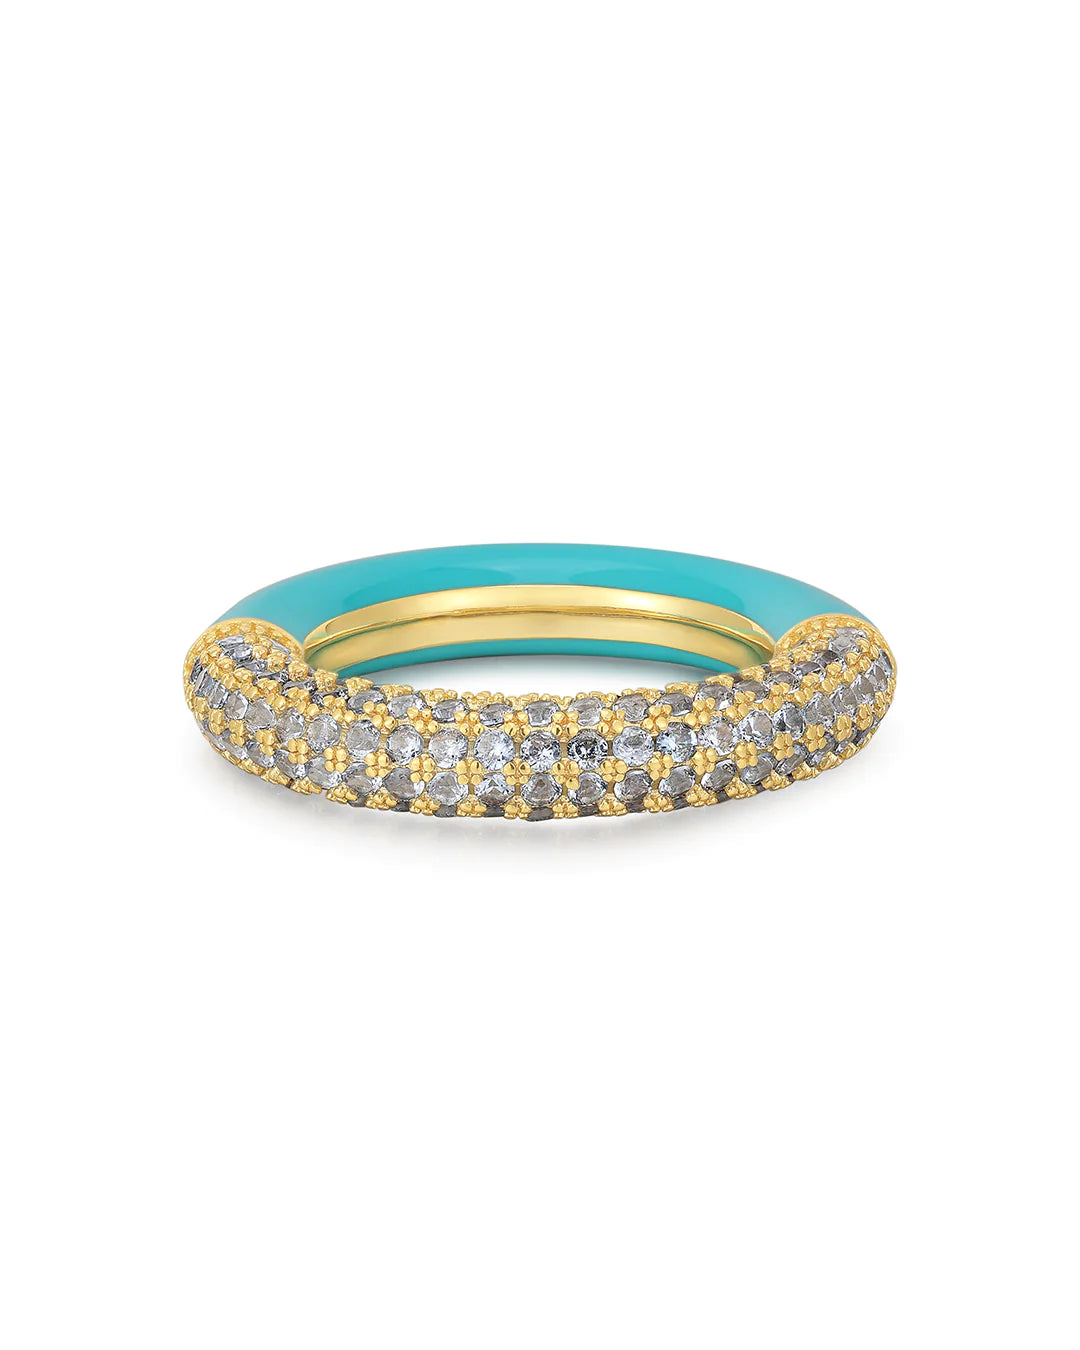 Pave Amalfi Ring - Turquoise - Gold